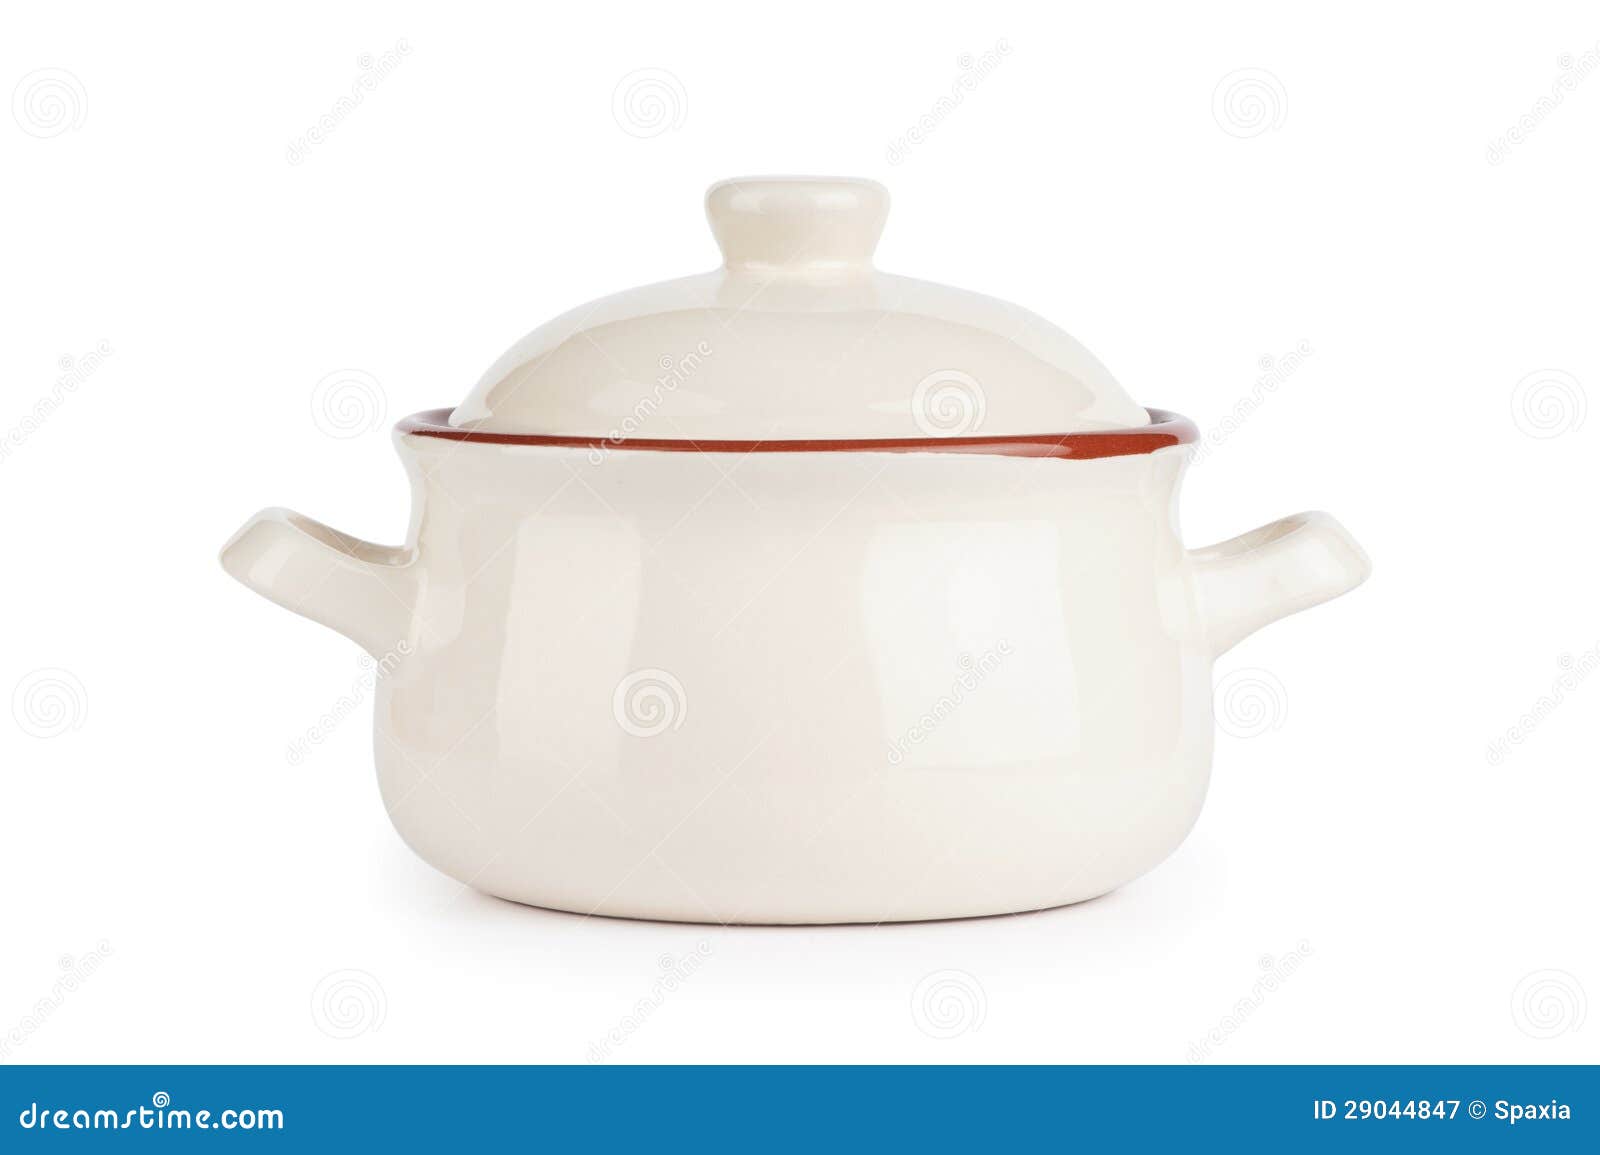 ceramic pot. soup tureen